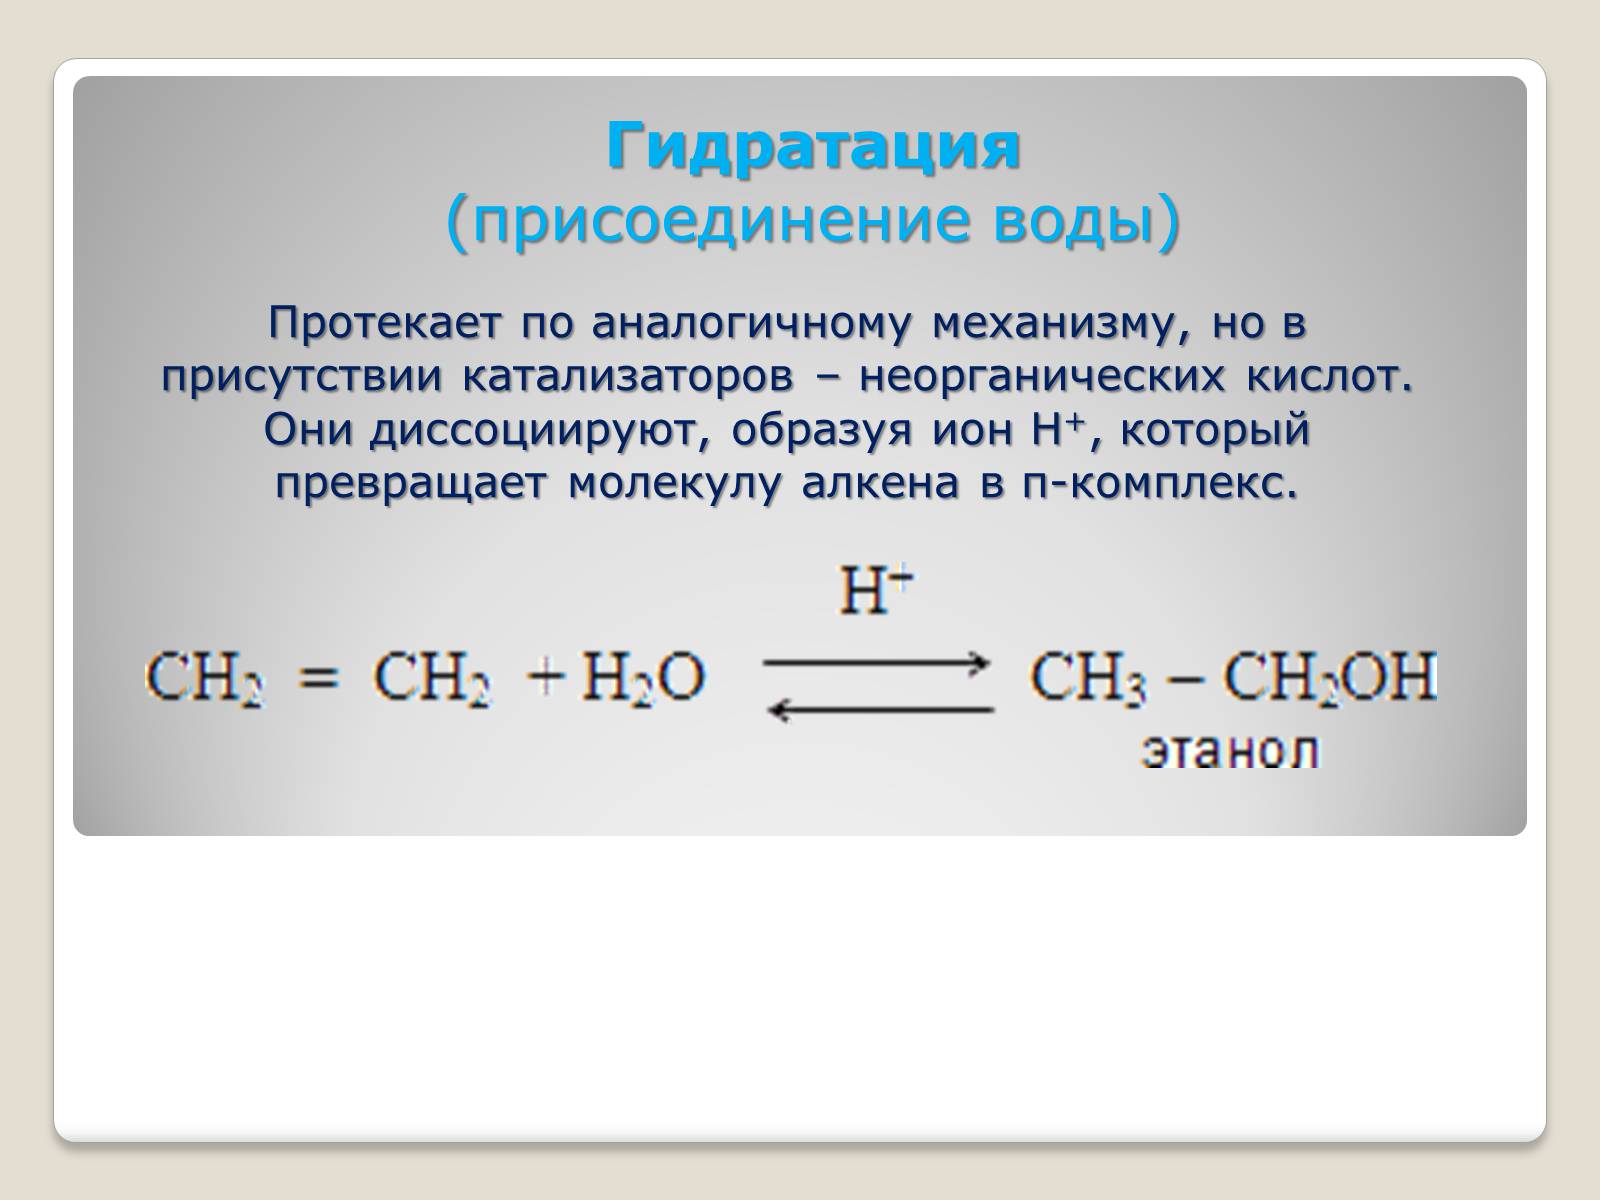 Презентація на тему «Химические свойства и применение алкенов» - Слайд #7